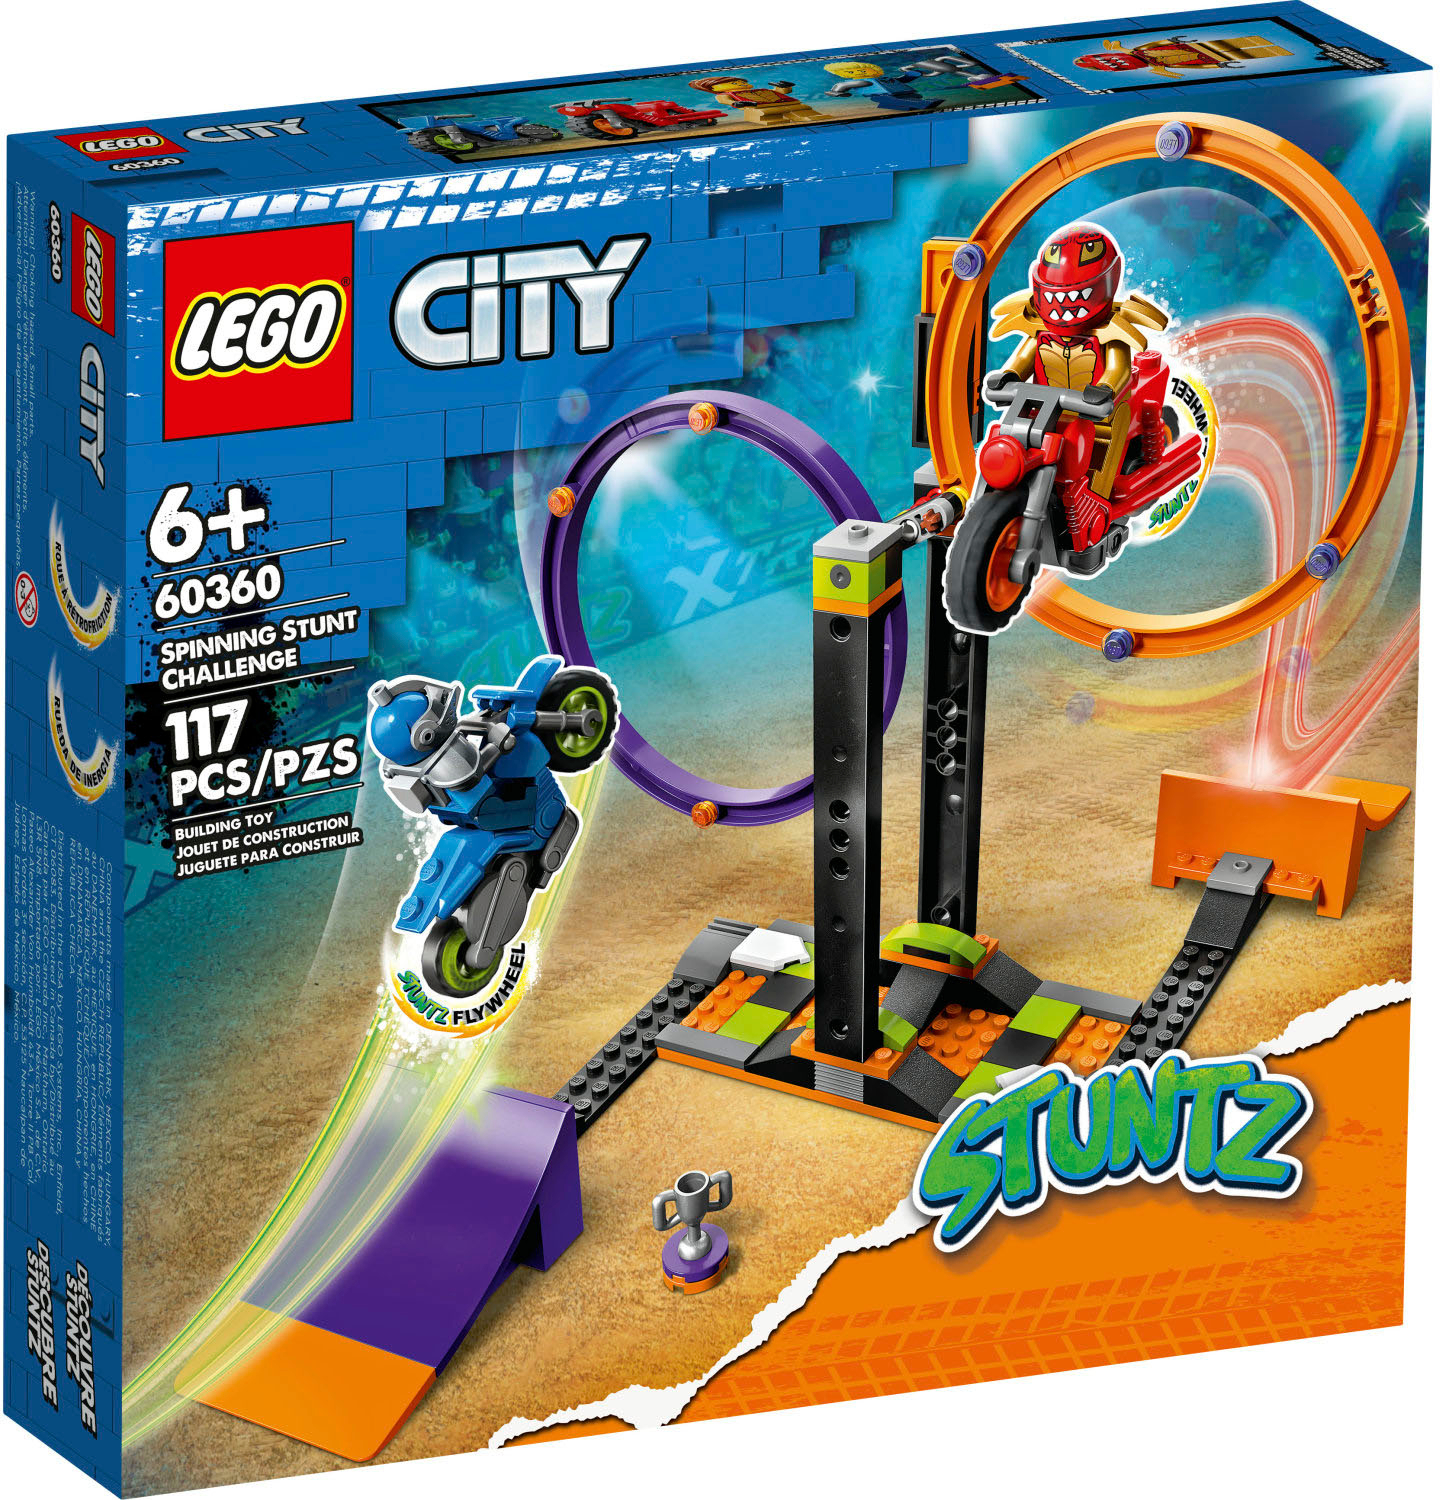 LEGO Buy: City 6425797 Challenge Stunt Best 60360 Spinning